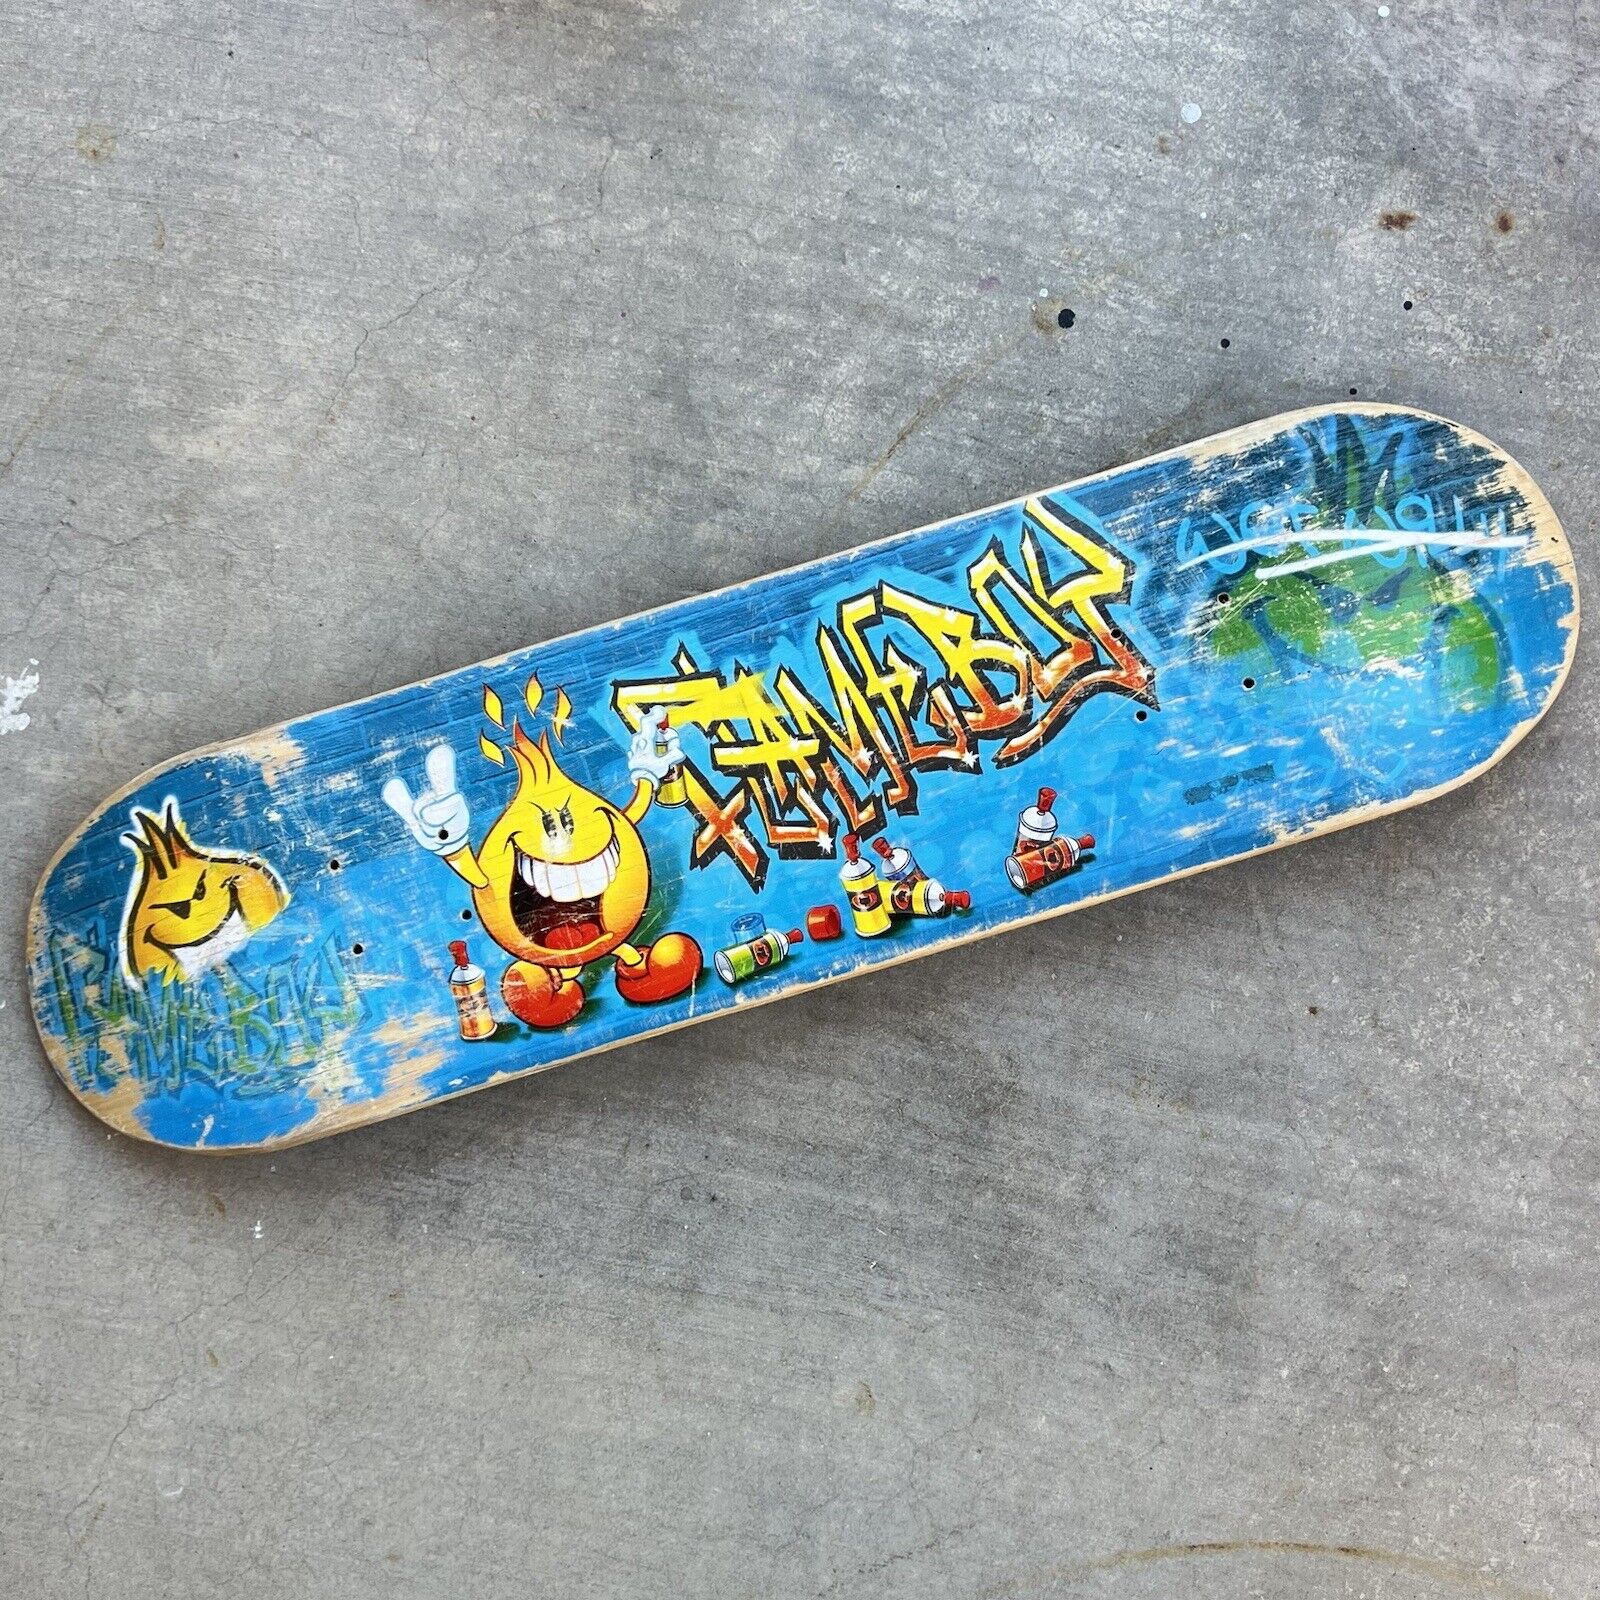 Vintage World Industries Skateboard Flame Boy Graffiti Skateboard Deck - USED